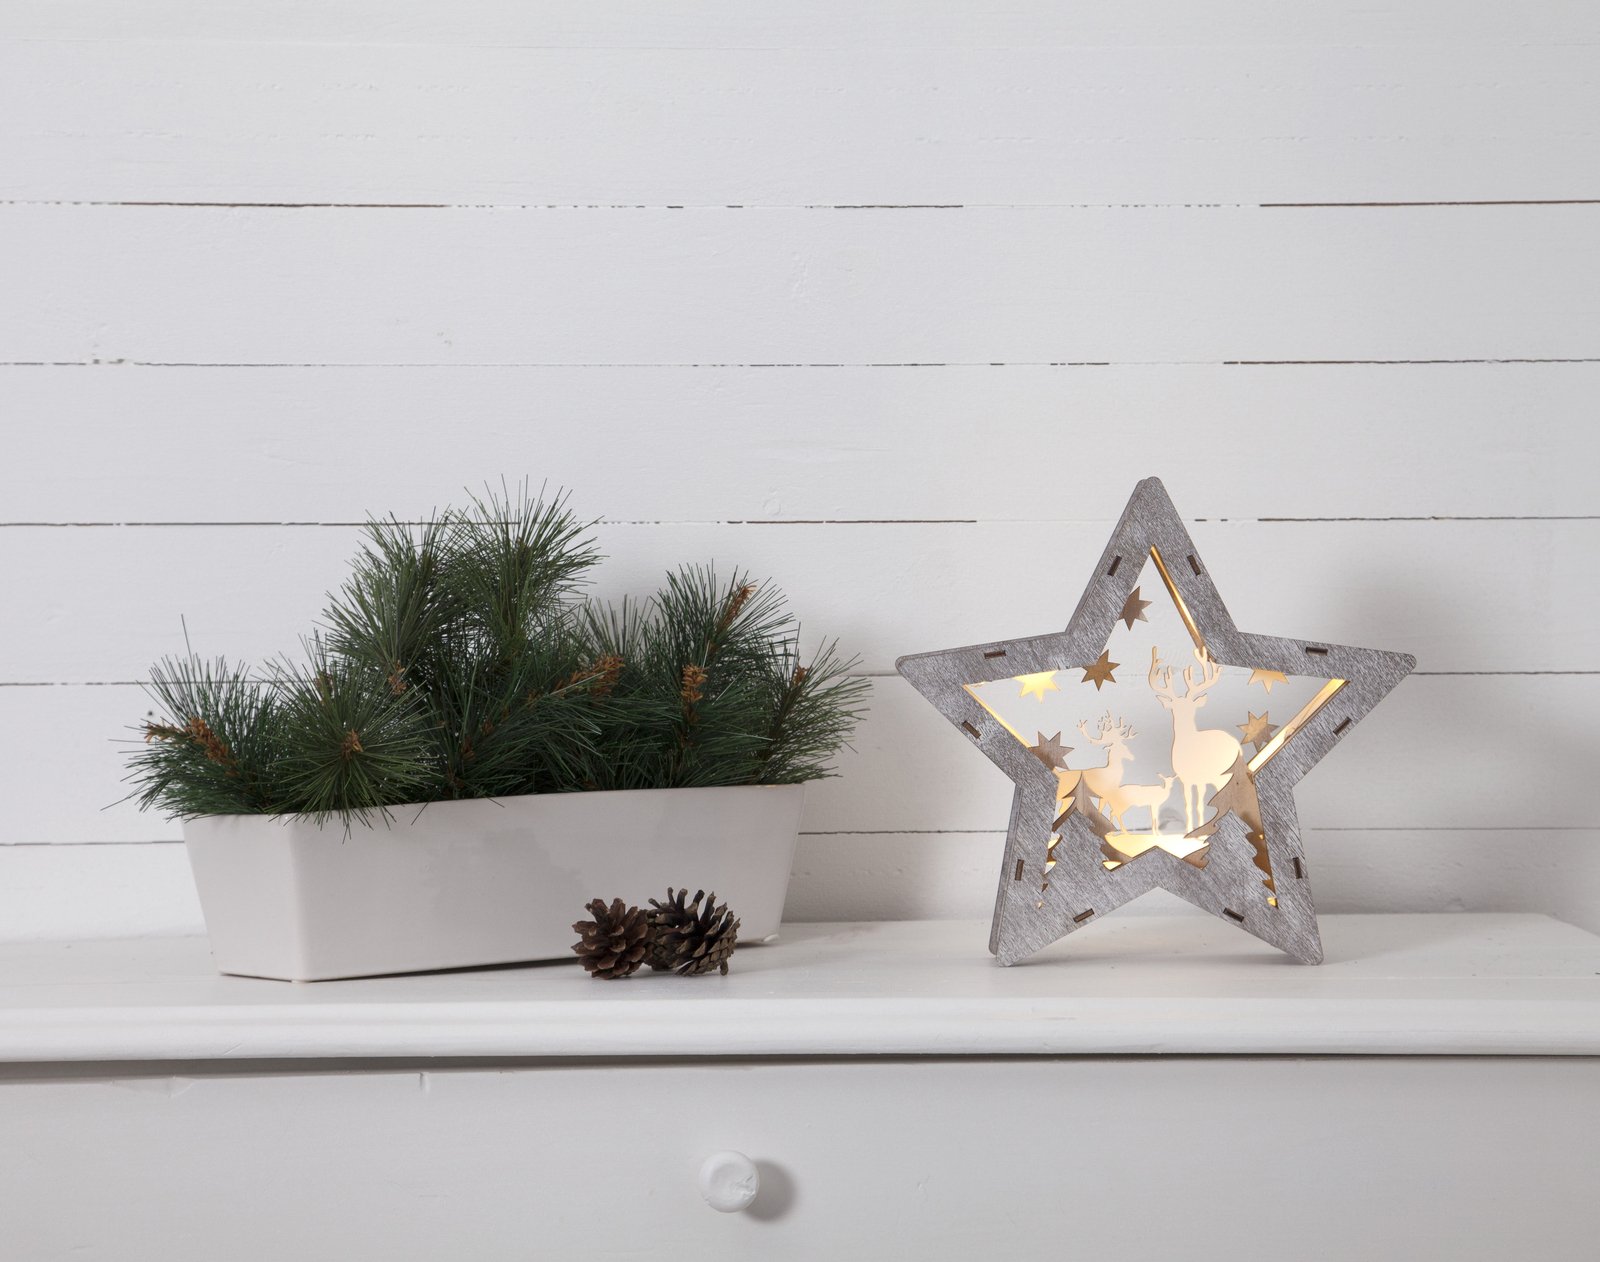 Fauna LED decorative star, wood, 24 cm high